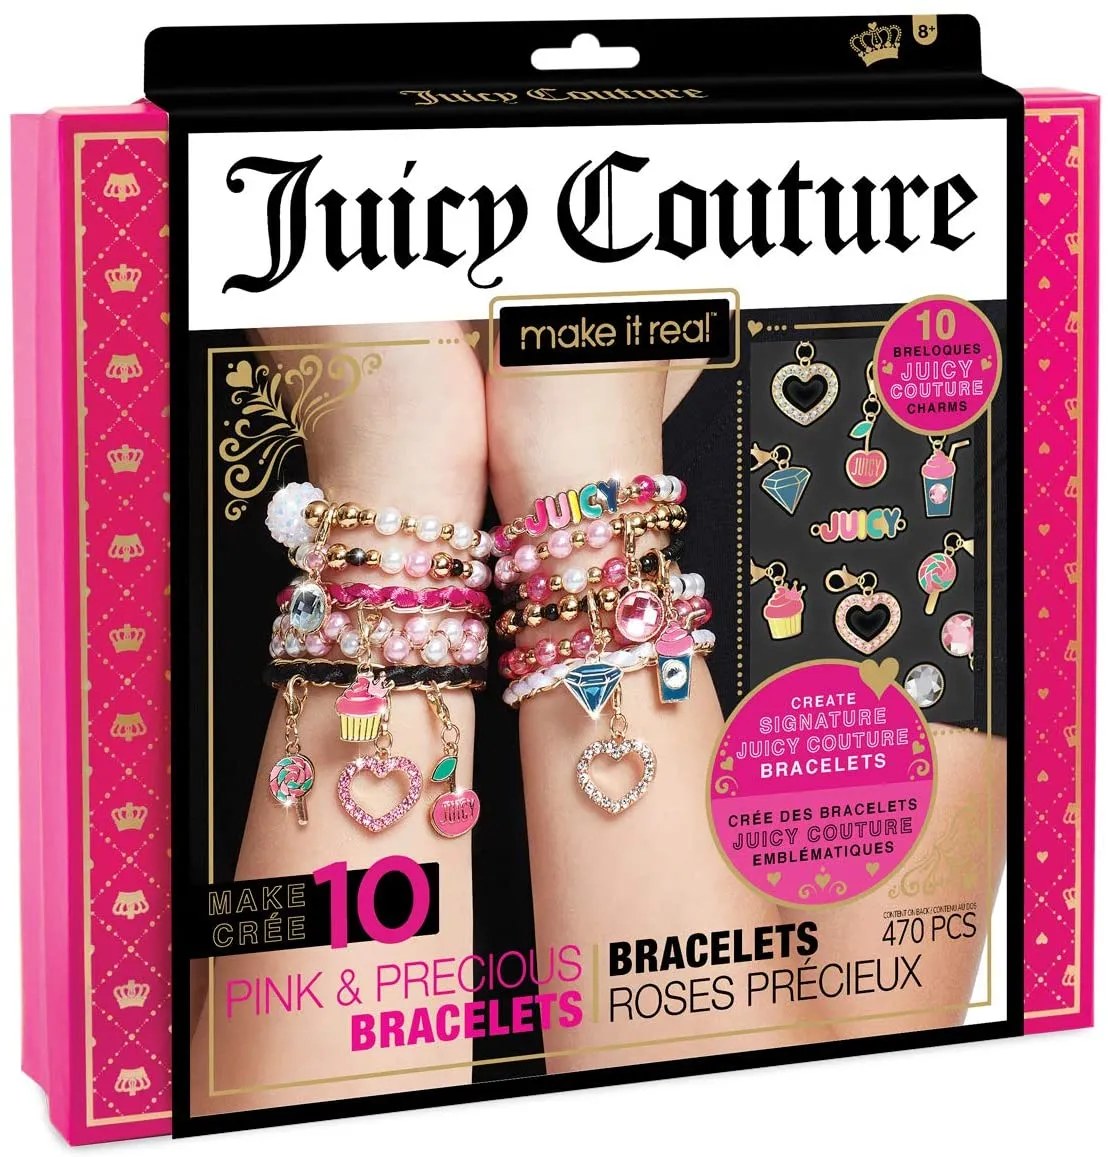 Charm Bracelets Kit with Beads Jewelry Charms Bracelets for DIY Craft  Beautiful Girls Jewelry Making Kit